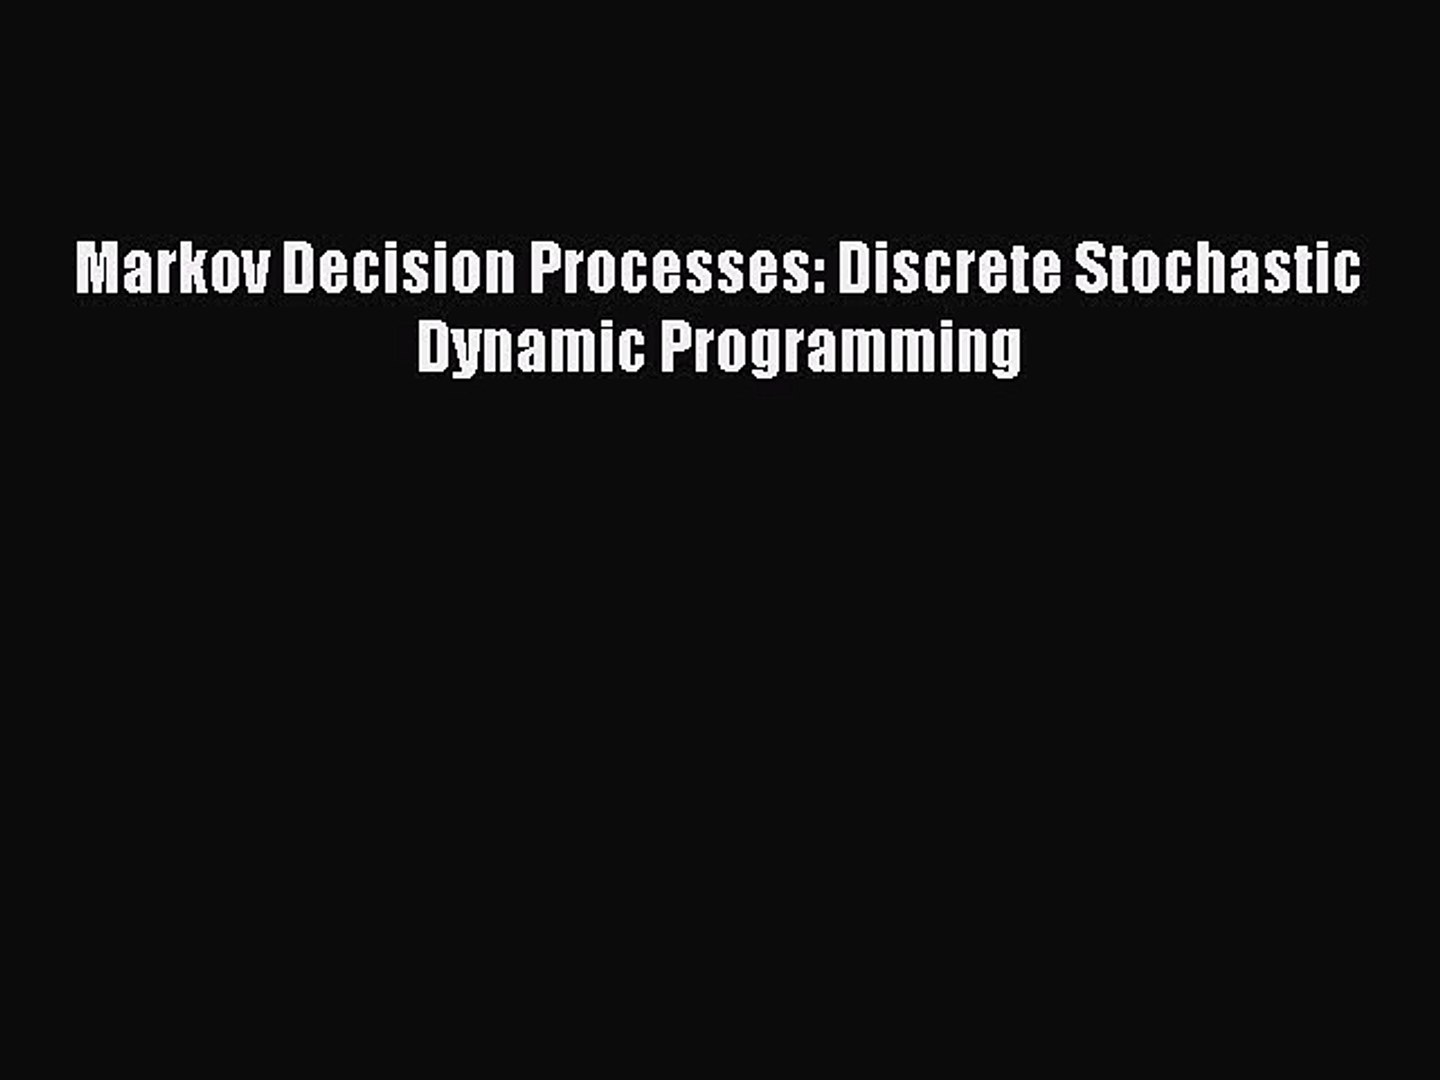 Download Markov Decision Processes: Discrete Stochastic Dynamic Programming Ebook Free